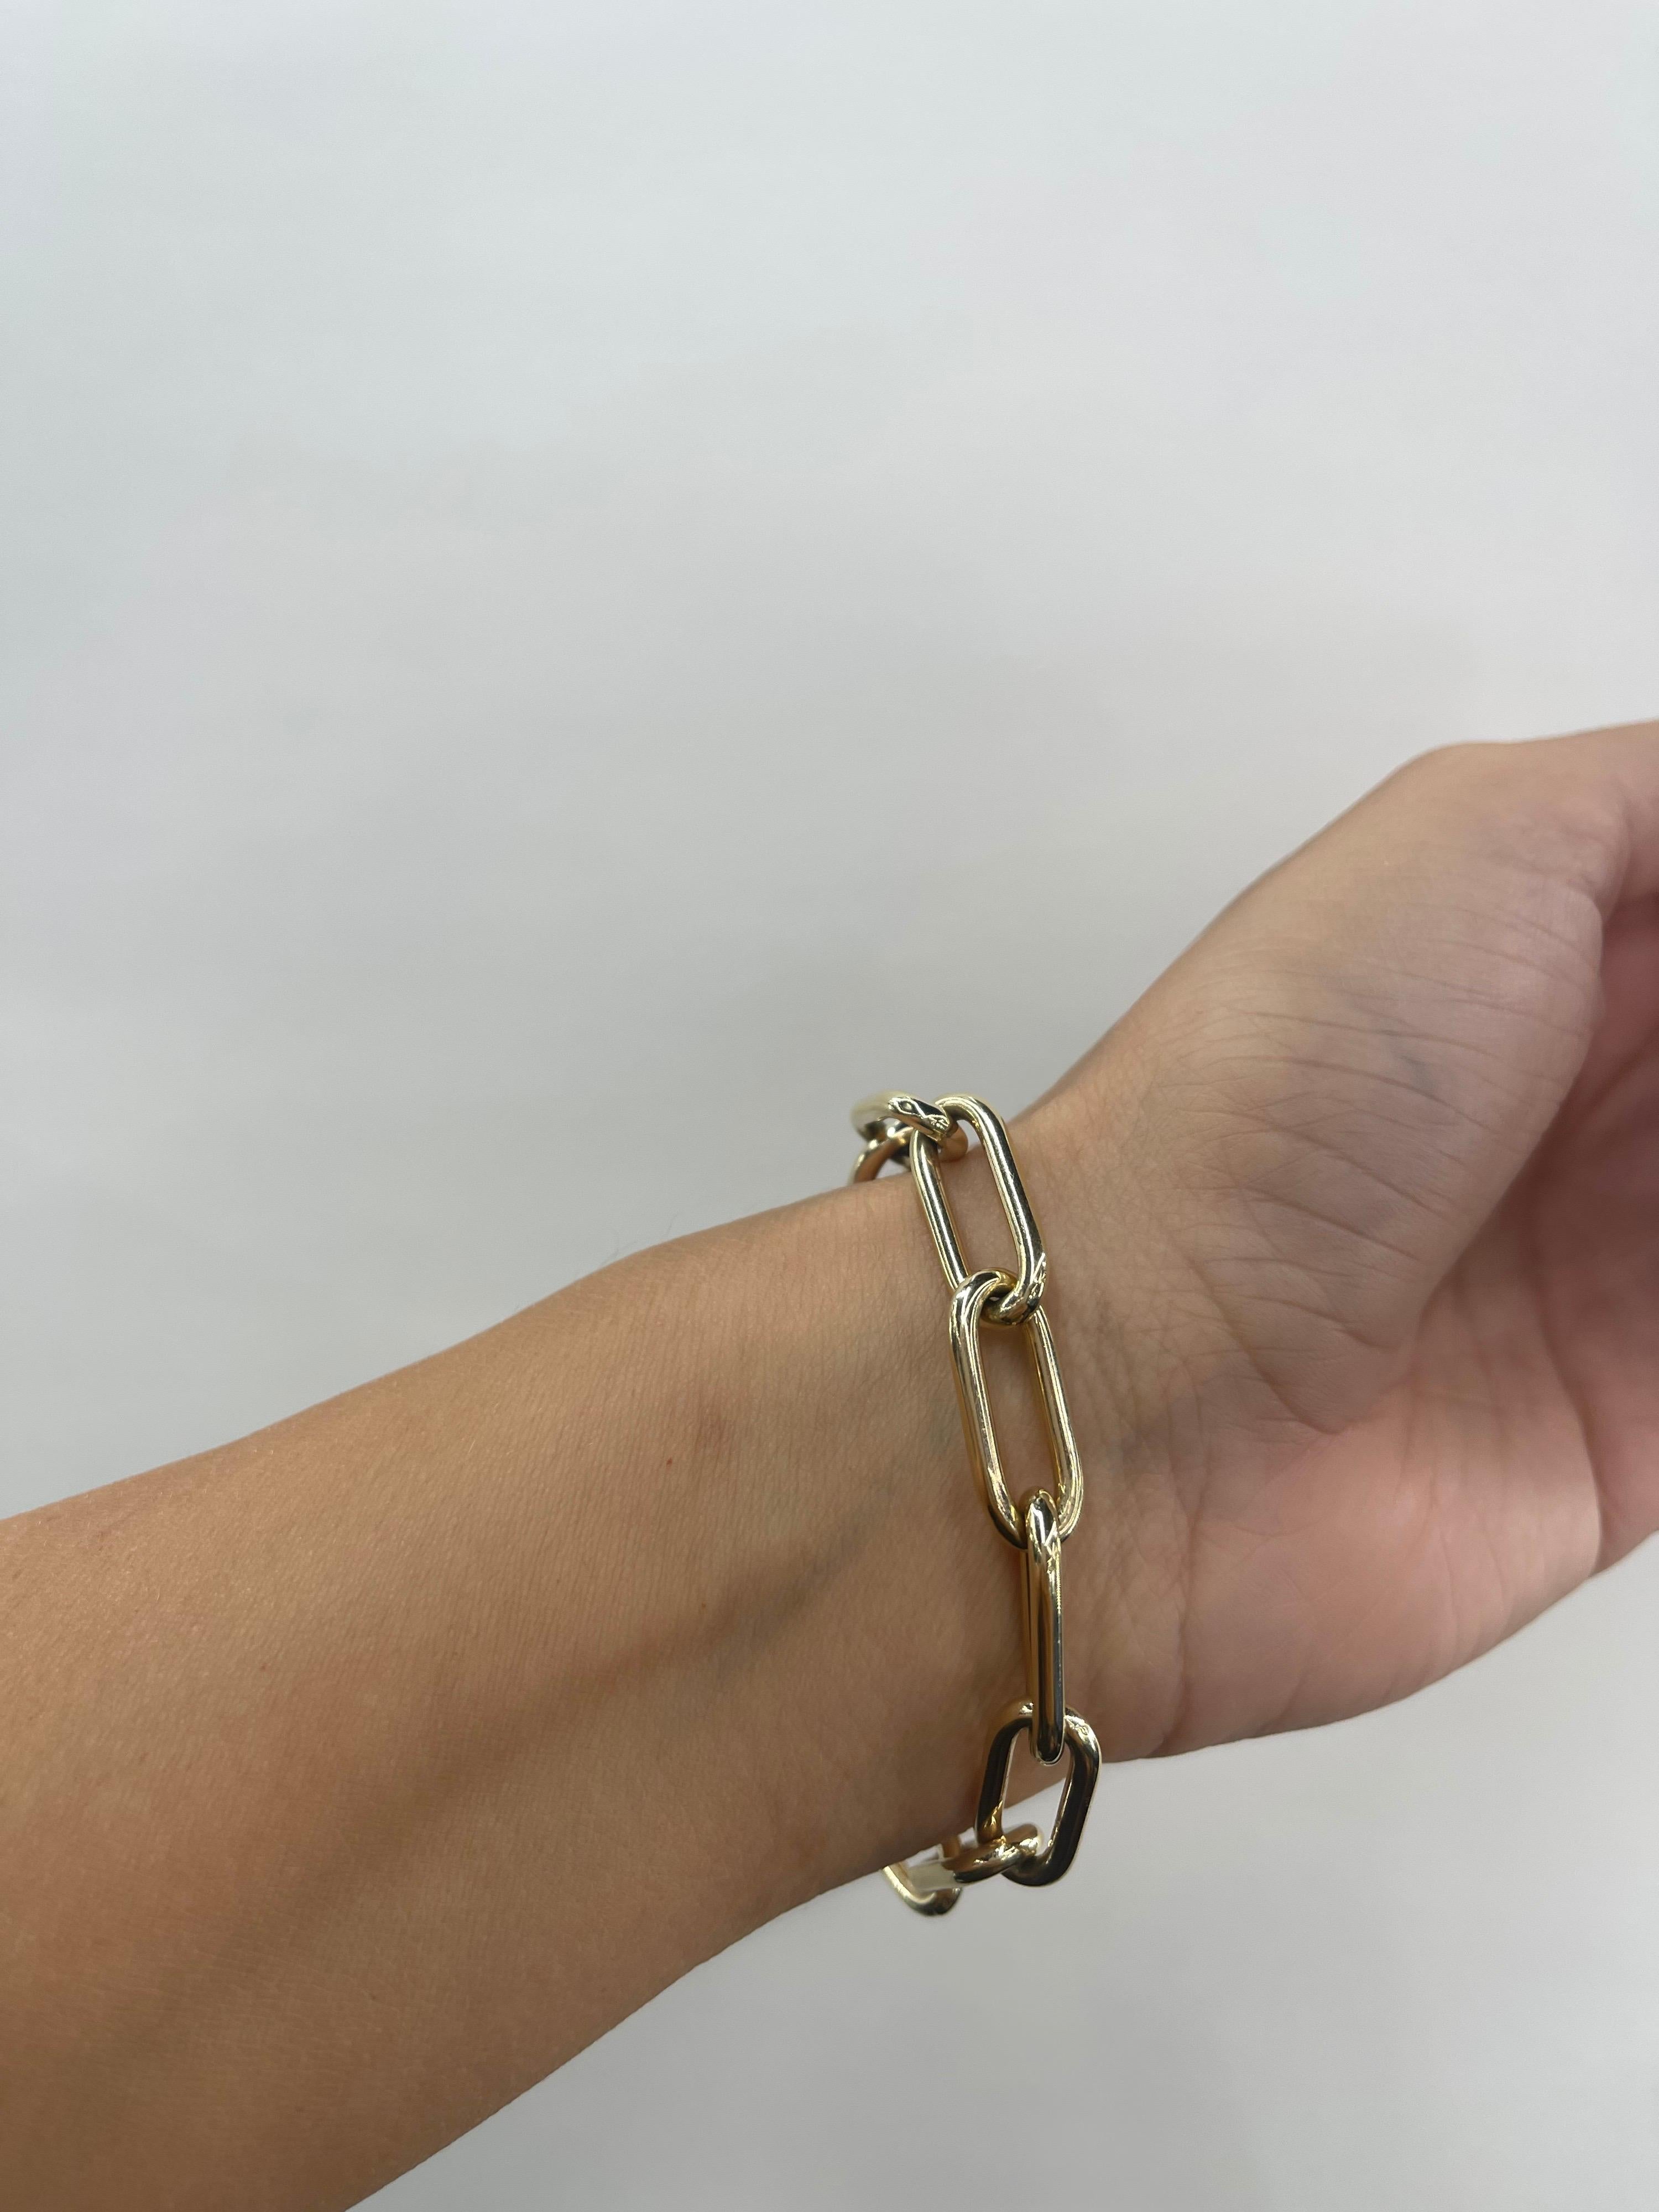 Modern Italian 14 Karat Yellow Gold Link Chain Bracelet with White Gold Diamond Clasp